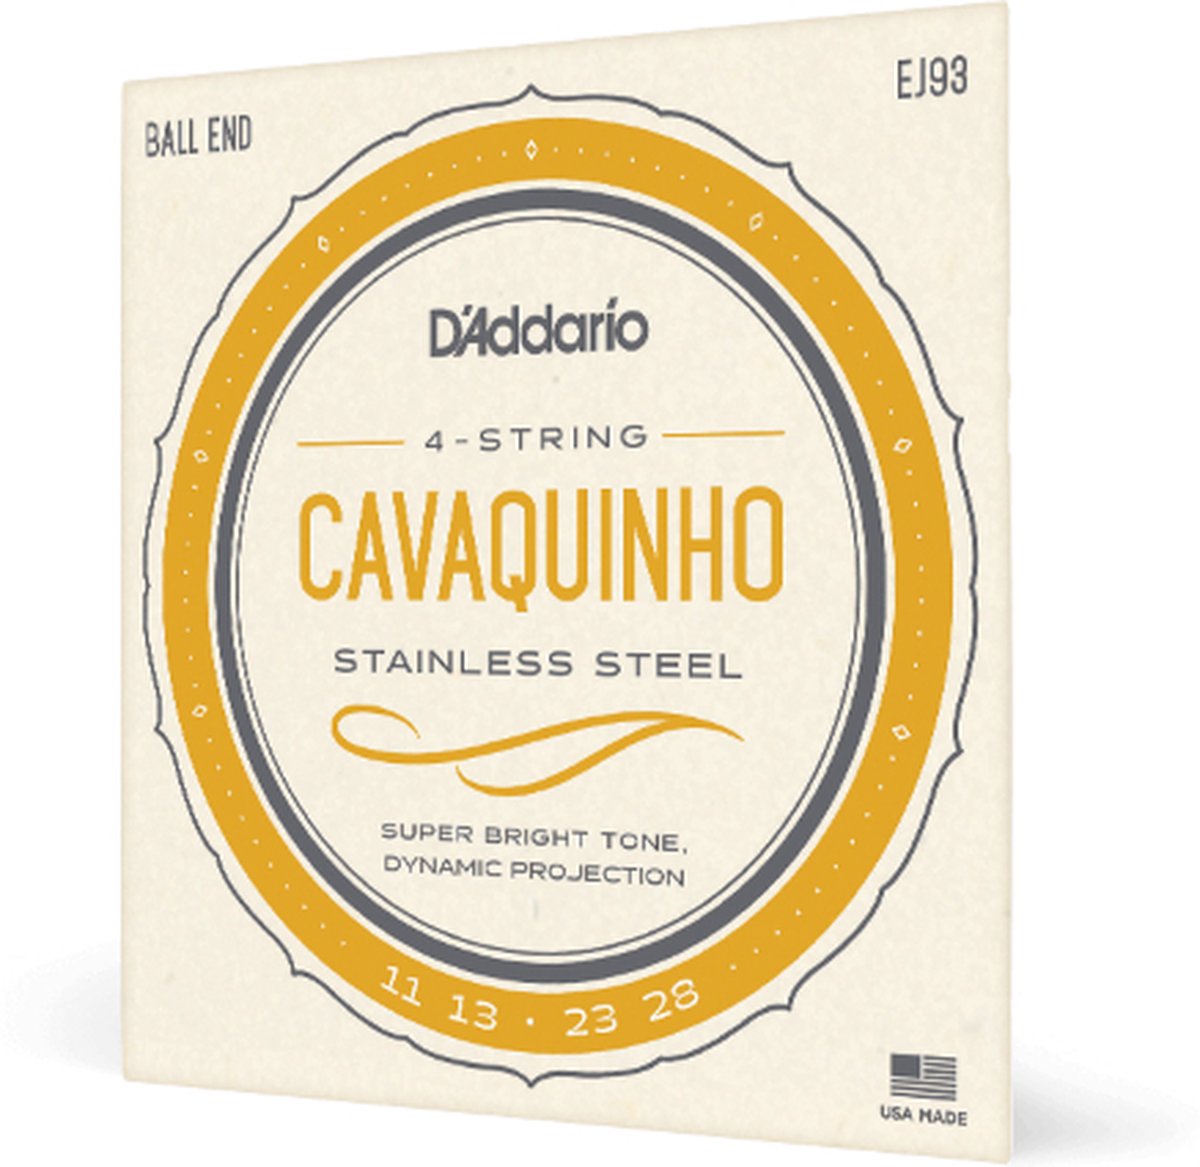 D'Addario J93 Stainless Steel Cavaquinho Strings